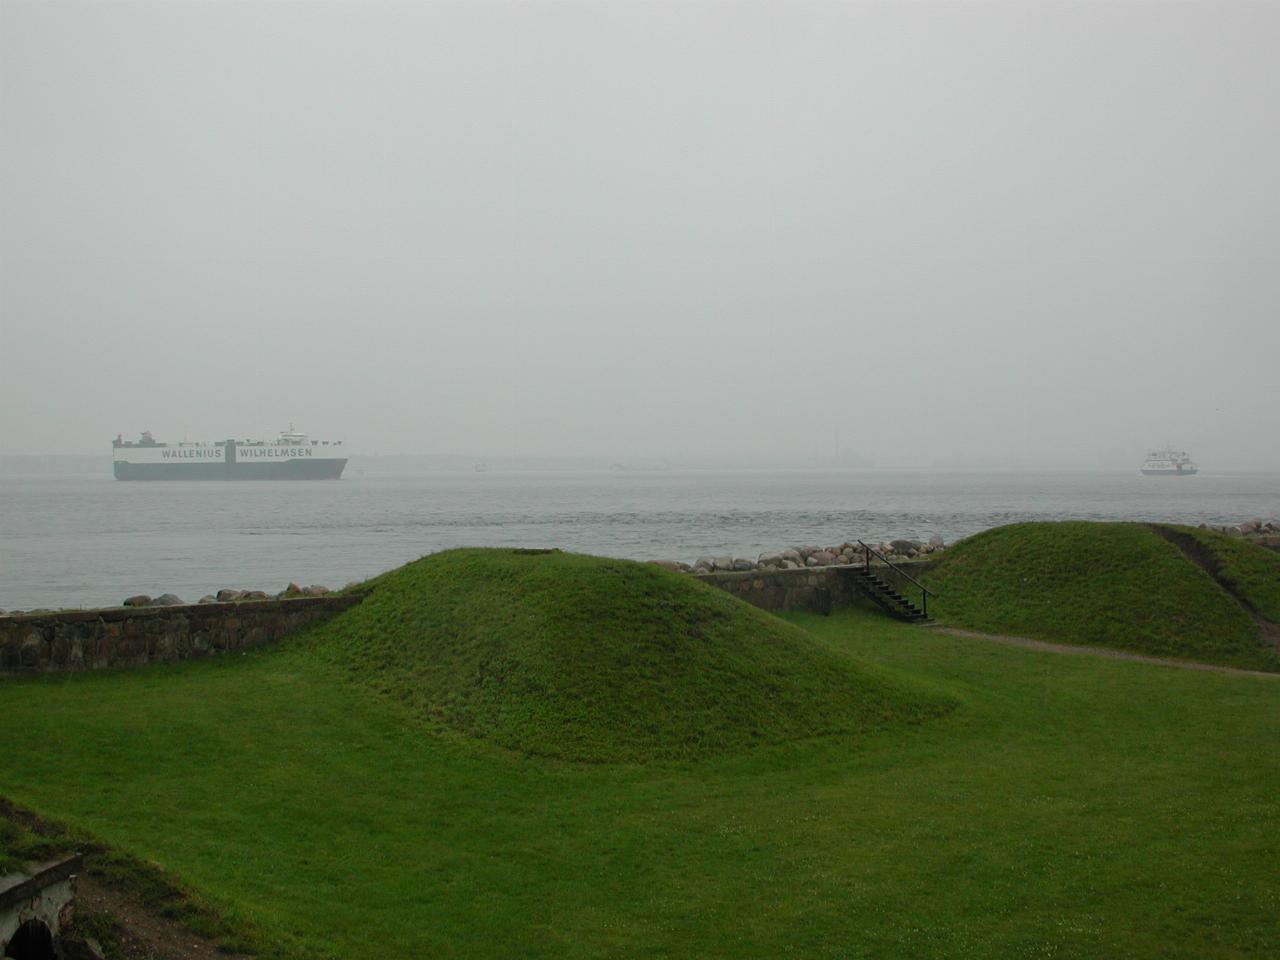 KPLU Viking Jazz: Ships in the :resund passing Helsingør Slot (Castle)